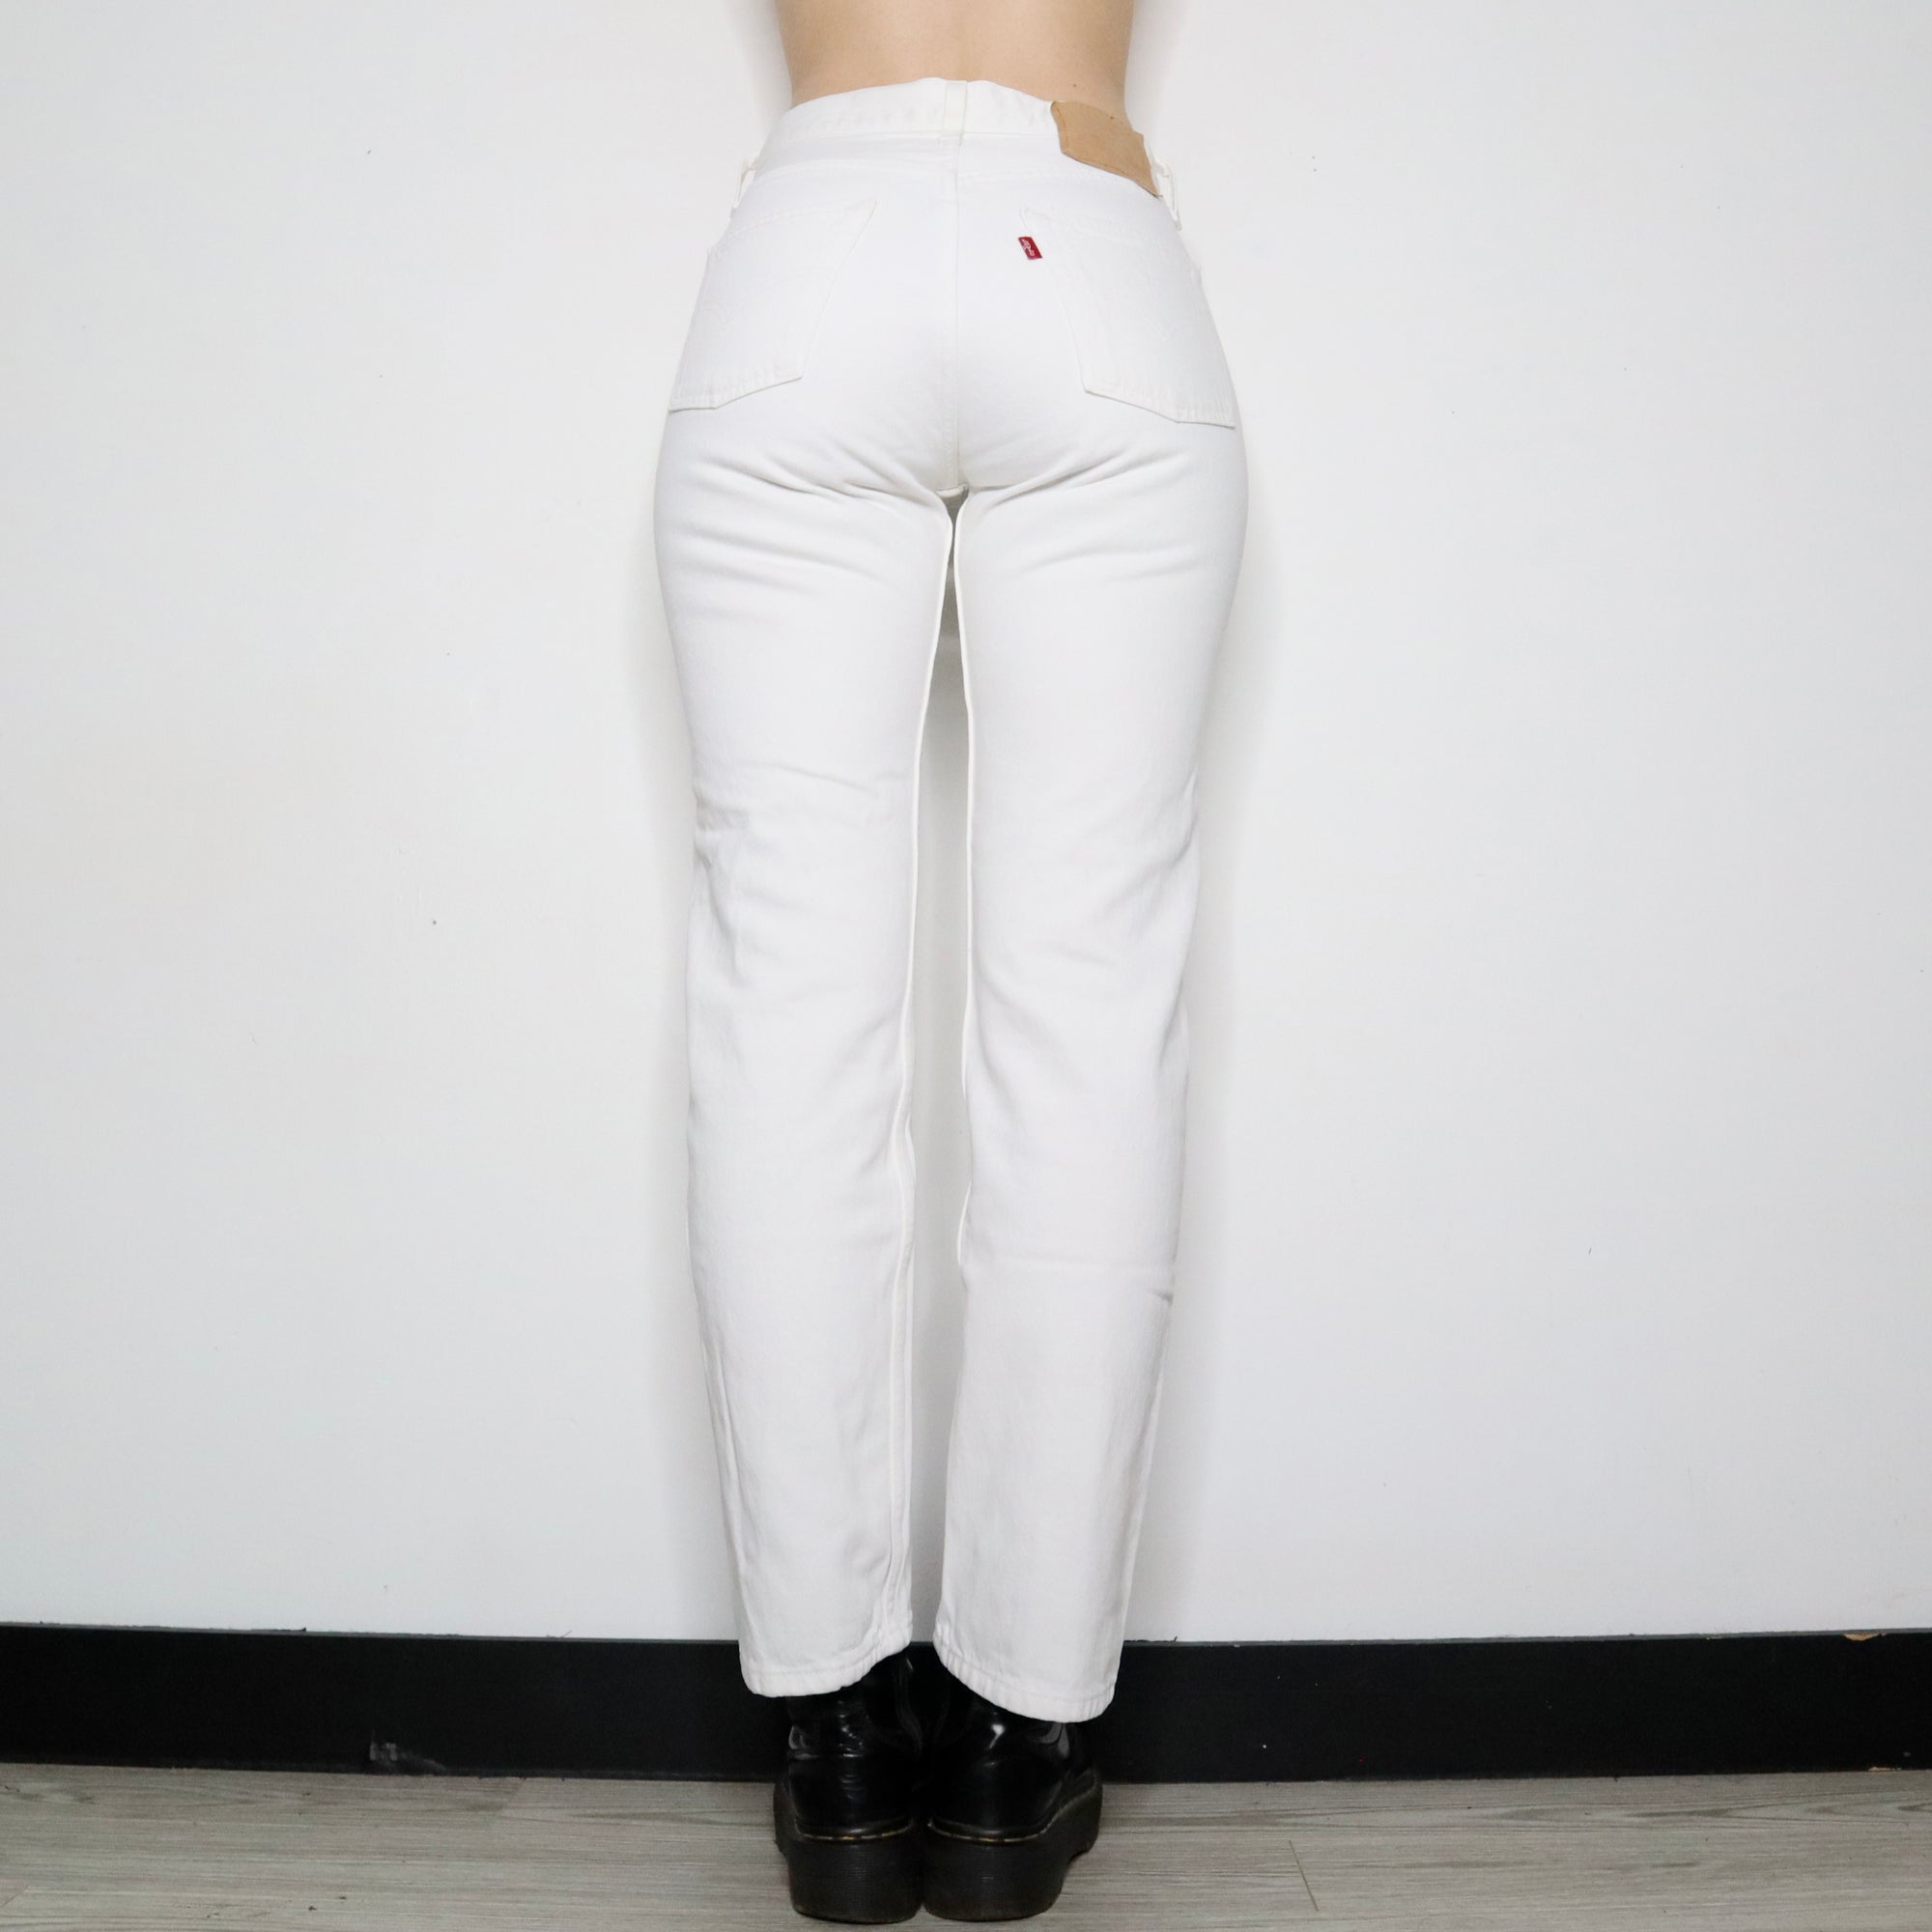 White 501 Levi's Jeans (S-M)